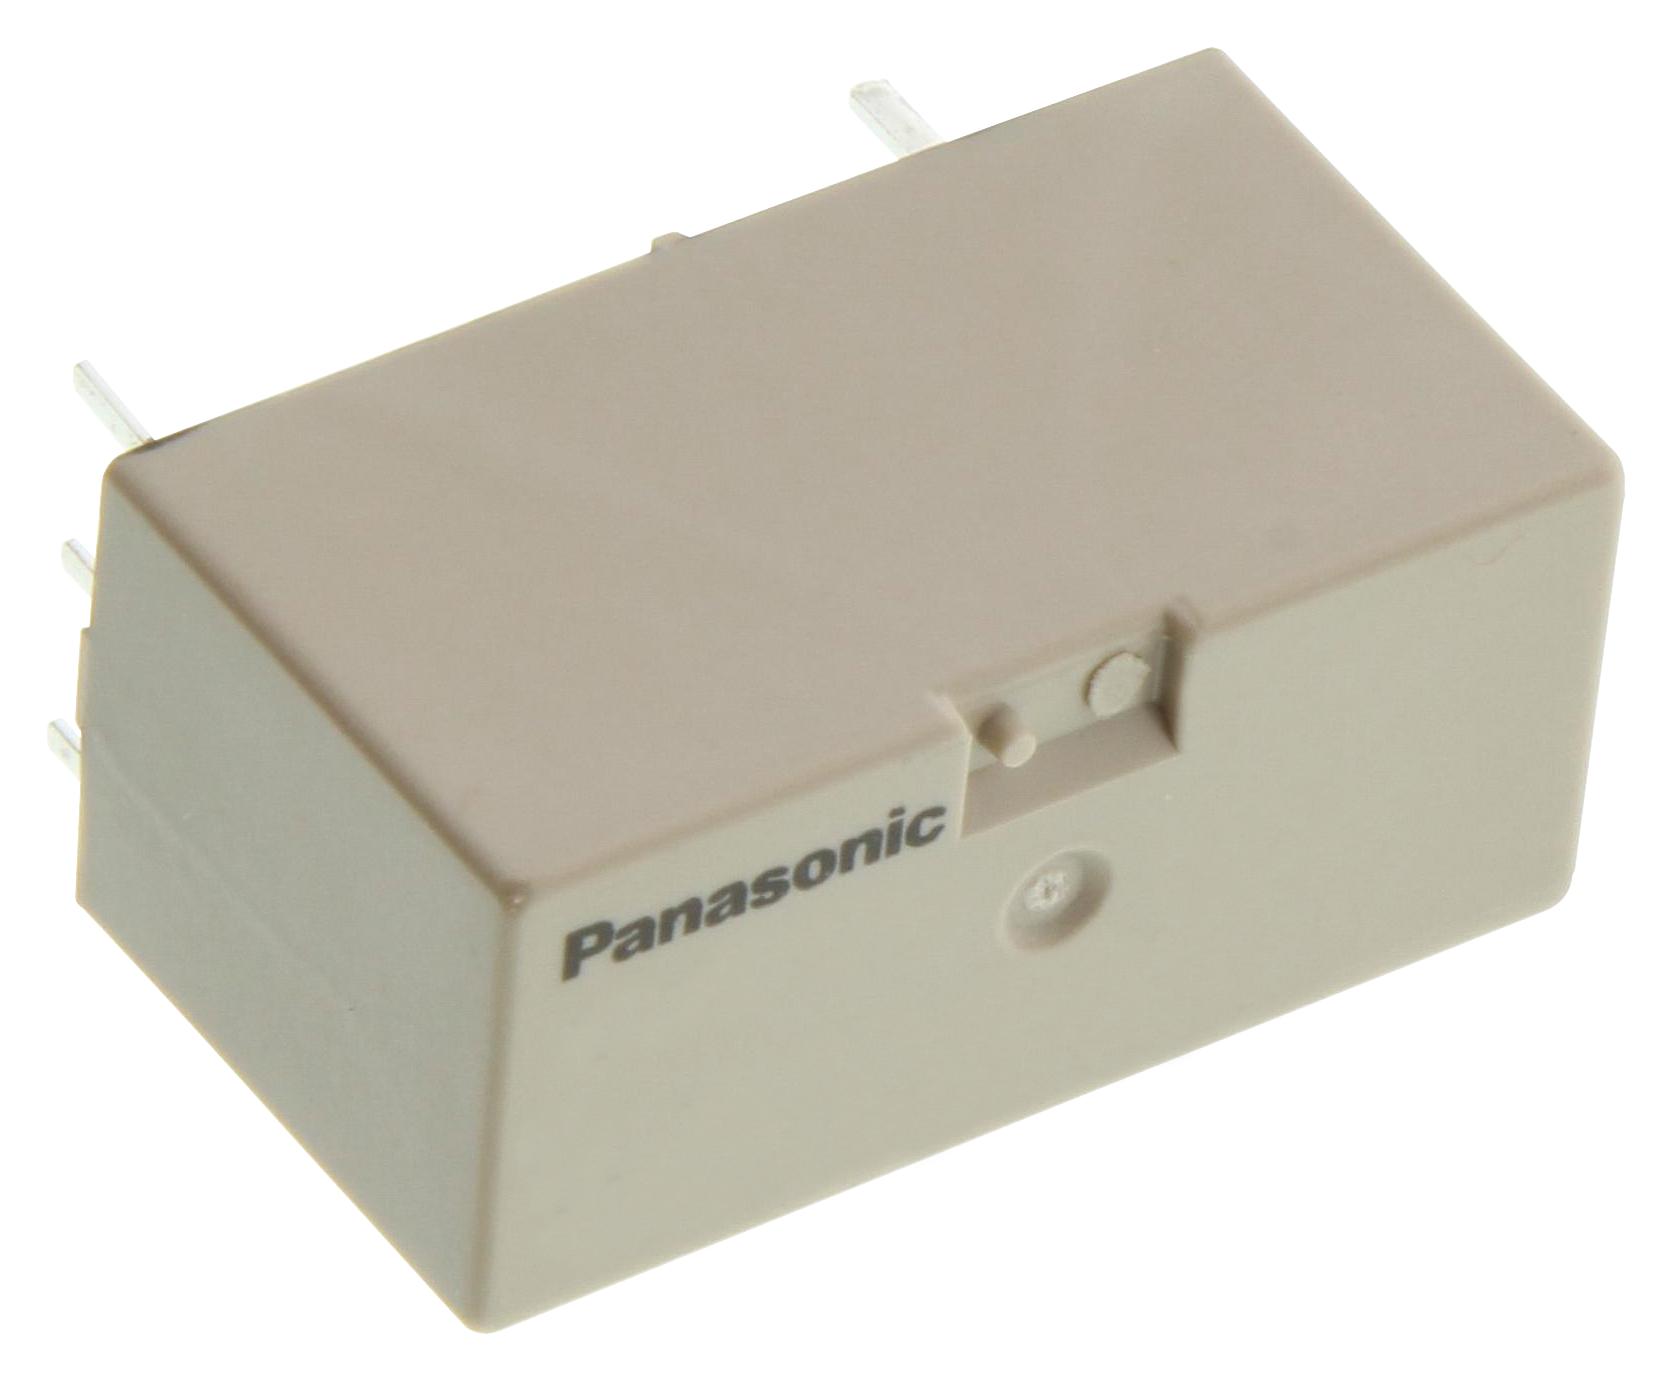 PANASONIC Power - General Purpose ADJ52006 POWER RELAY, DPDT, 6VDC, TH PANASONIC 3883372 ADJ52006